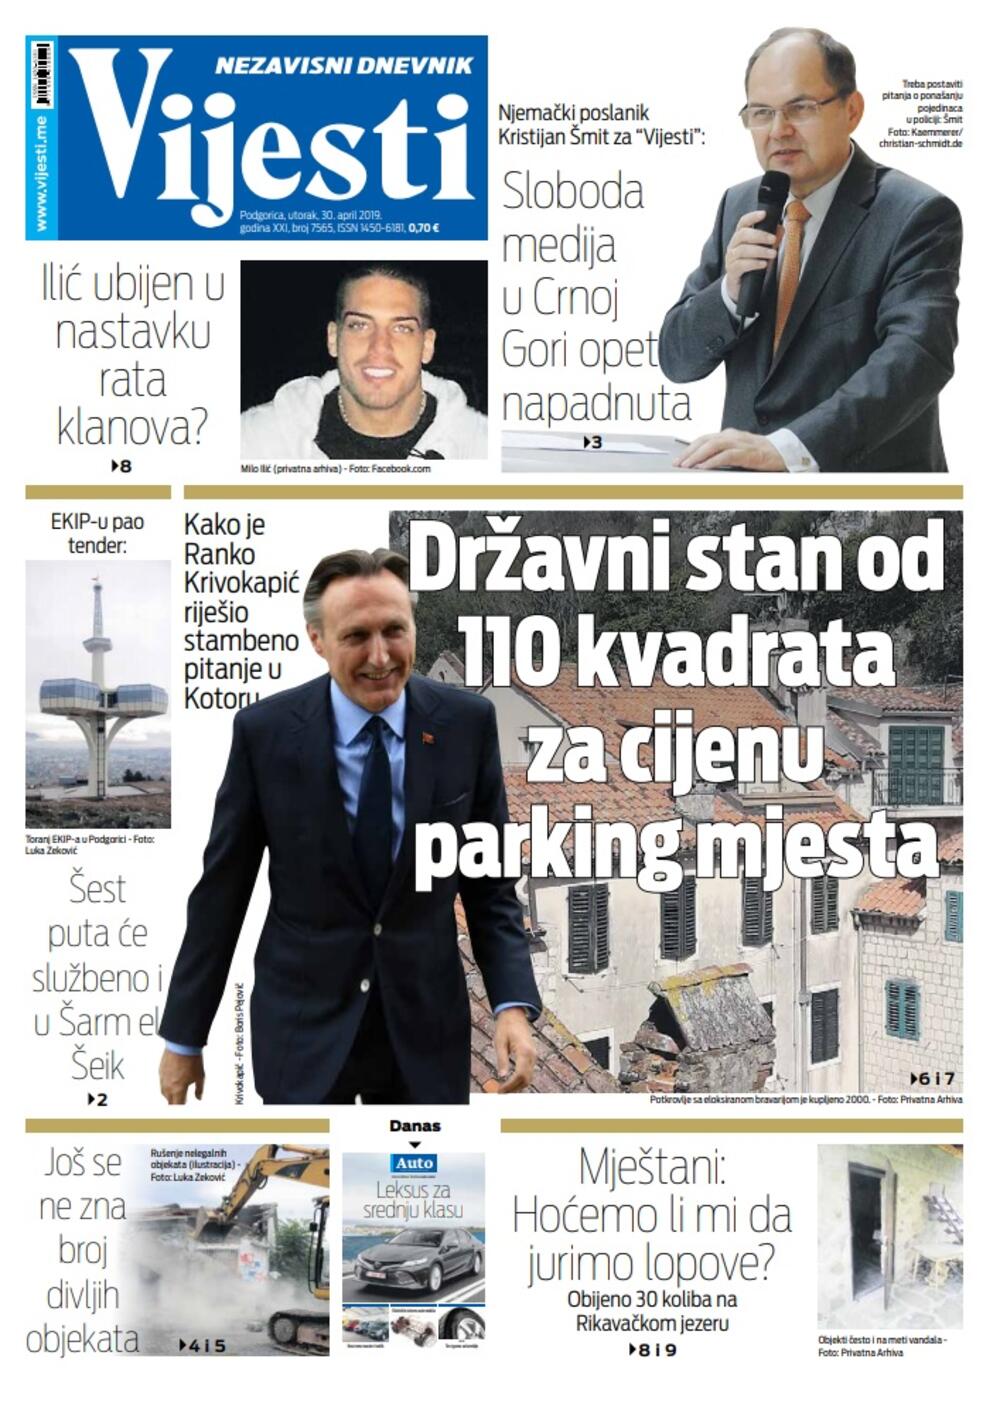 Naslovna strana "Vijesti" za 30. april